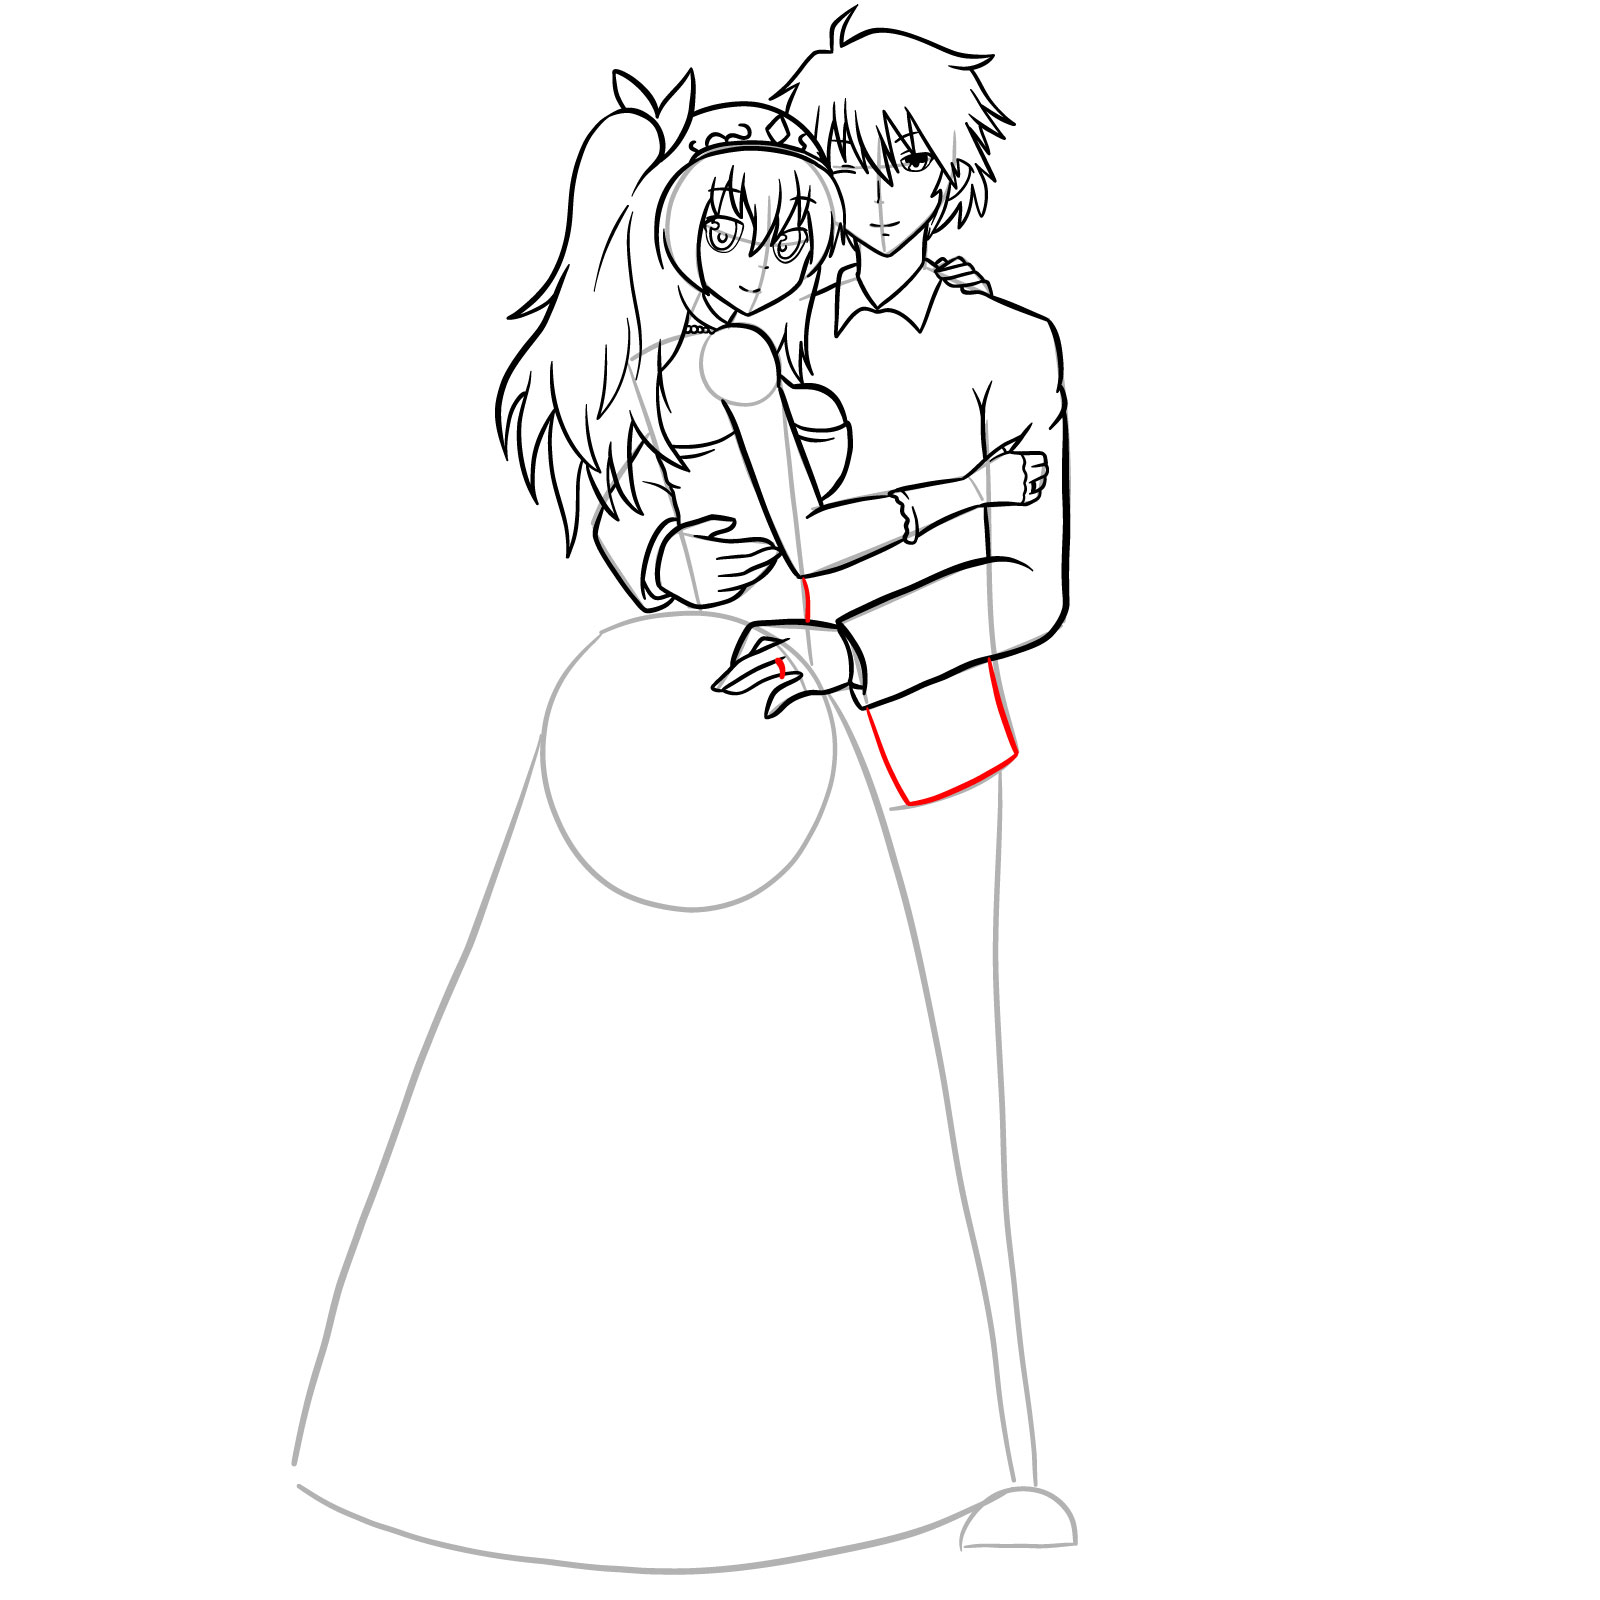 How to draw Ikki and Stella's wedding - step 44